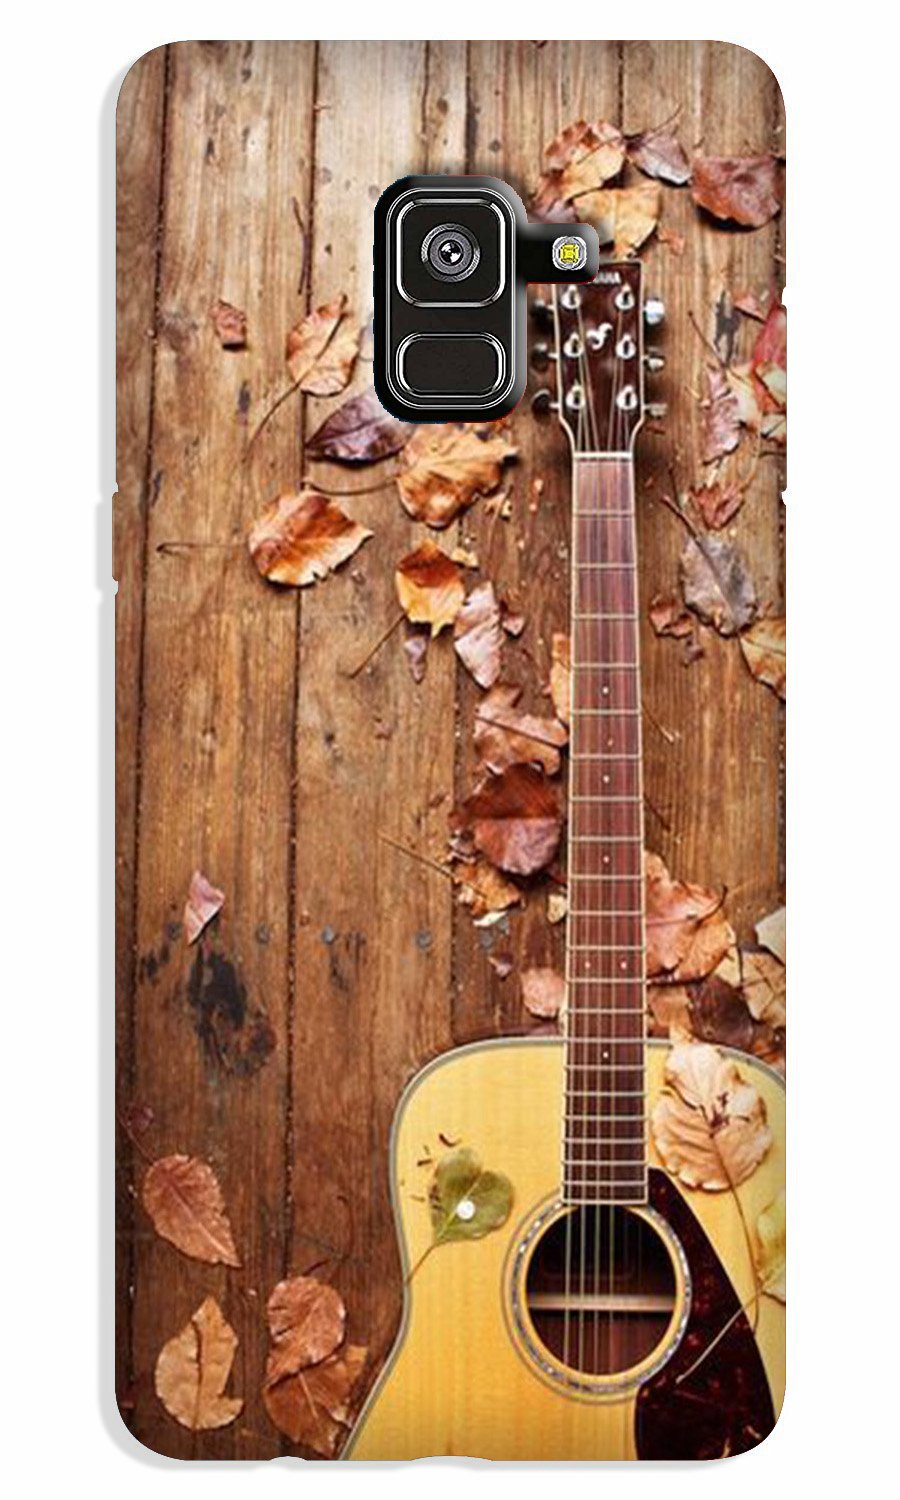 Guitar Case for Galaxy A8 Plus